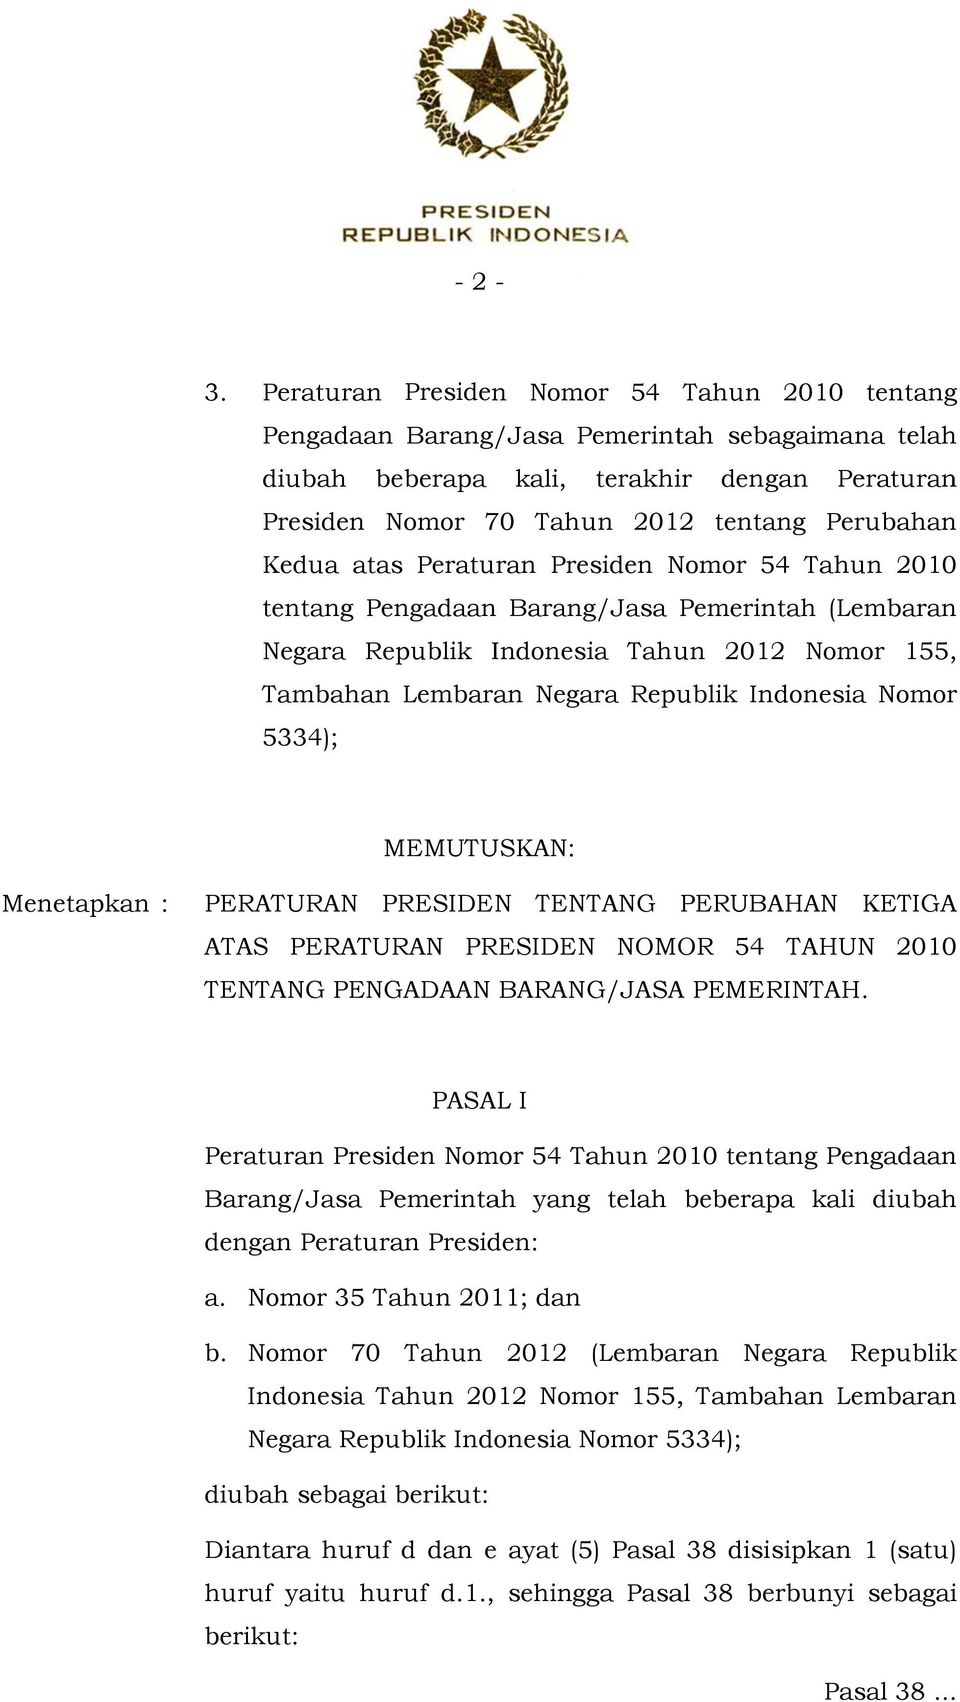 Kedua atas Peraturan Presiden Nomor 54 Tahun 20100 tentang Pengadaann Barang/Jasa Pemerintah (Lembaran Negara Republik Indonesia Tahun 2012 Nomor 155, Tambahan Lembaran Negara Republik Indonesia